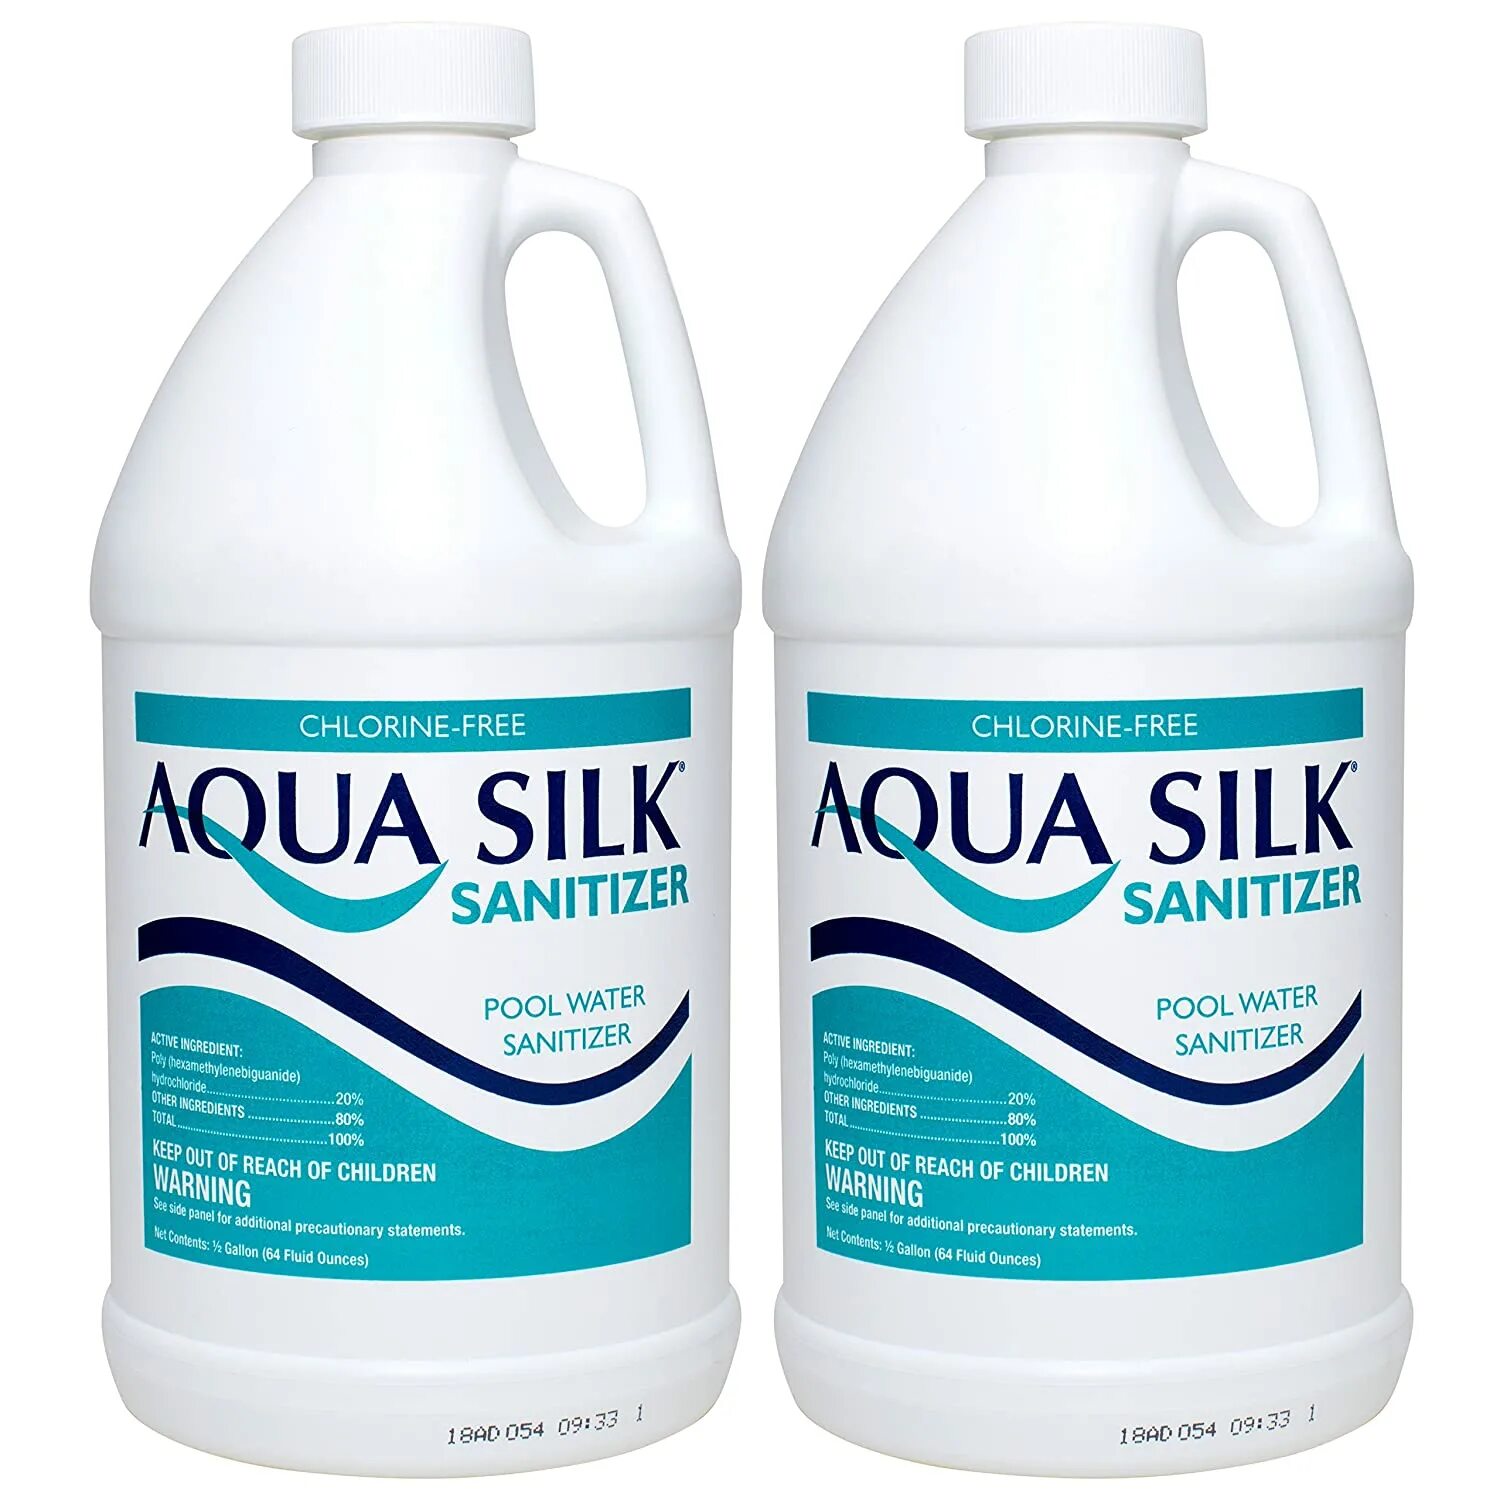 Дез вода. Артикул Silky Aqua >>>. Клеа и хлорин. Дезинфицирующая вода Рио. Аква хлор беграунд дизайн.